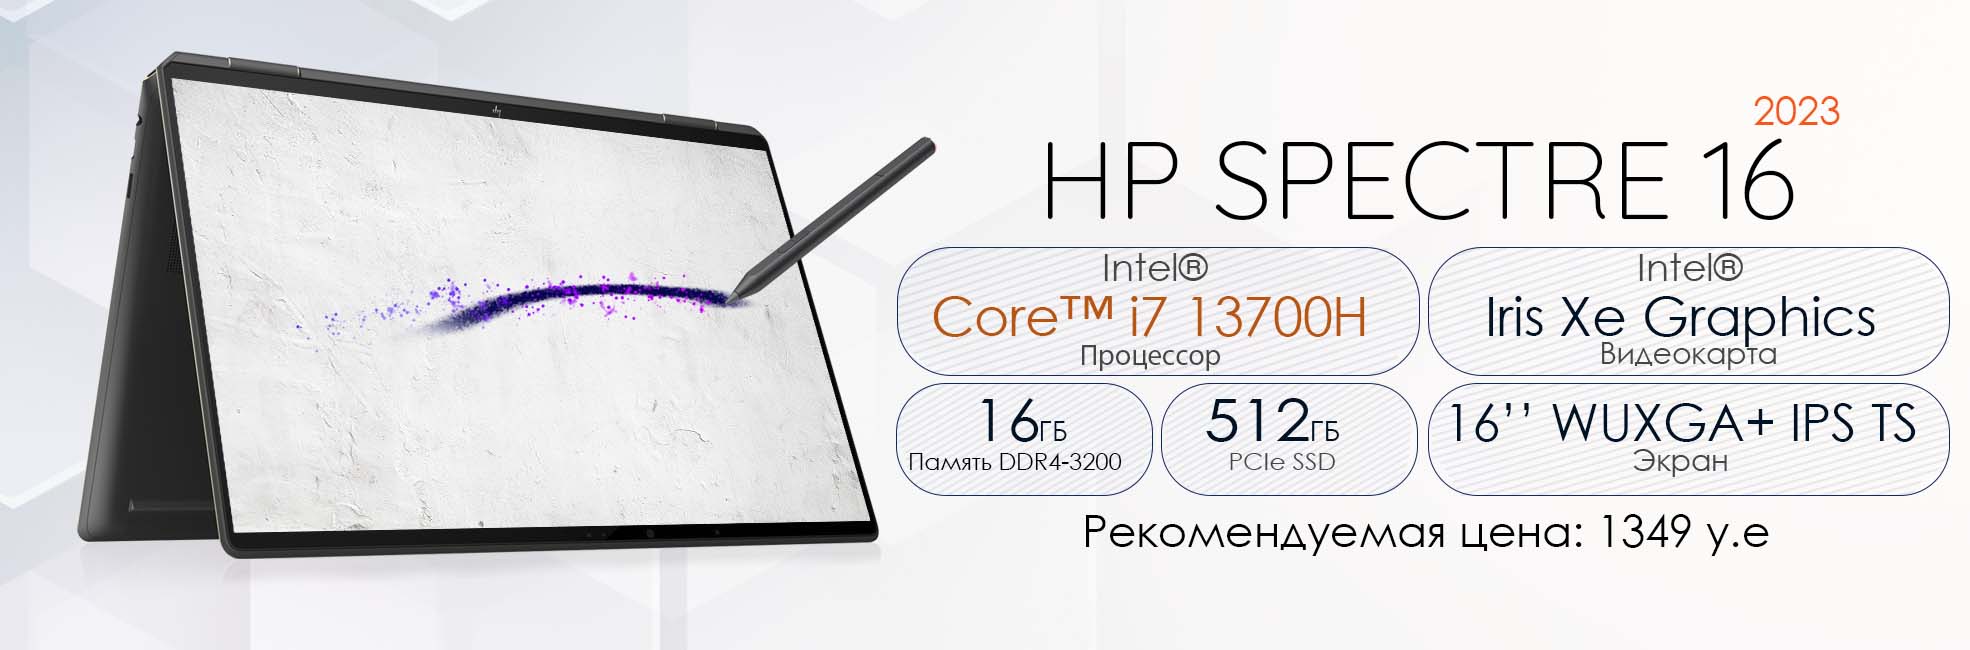 Spectre 16 1970x650 i7 Hp Spectre - Ноутбуки HP Спектр